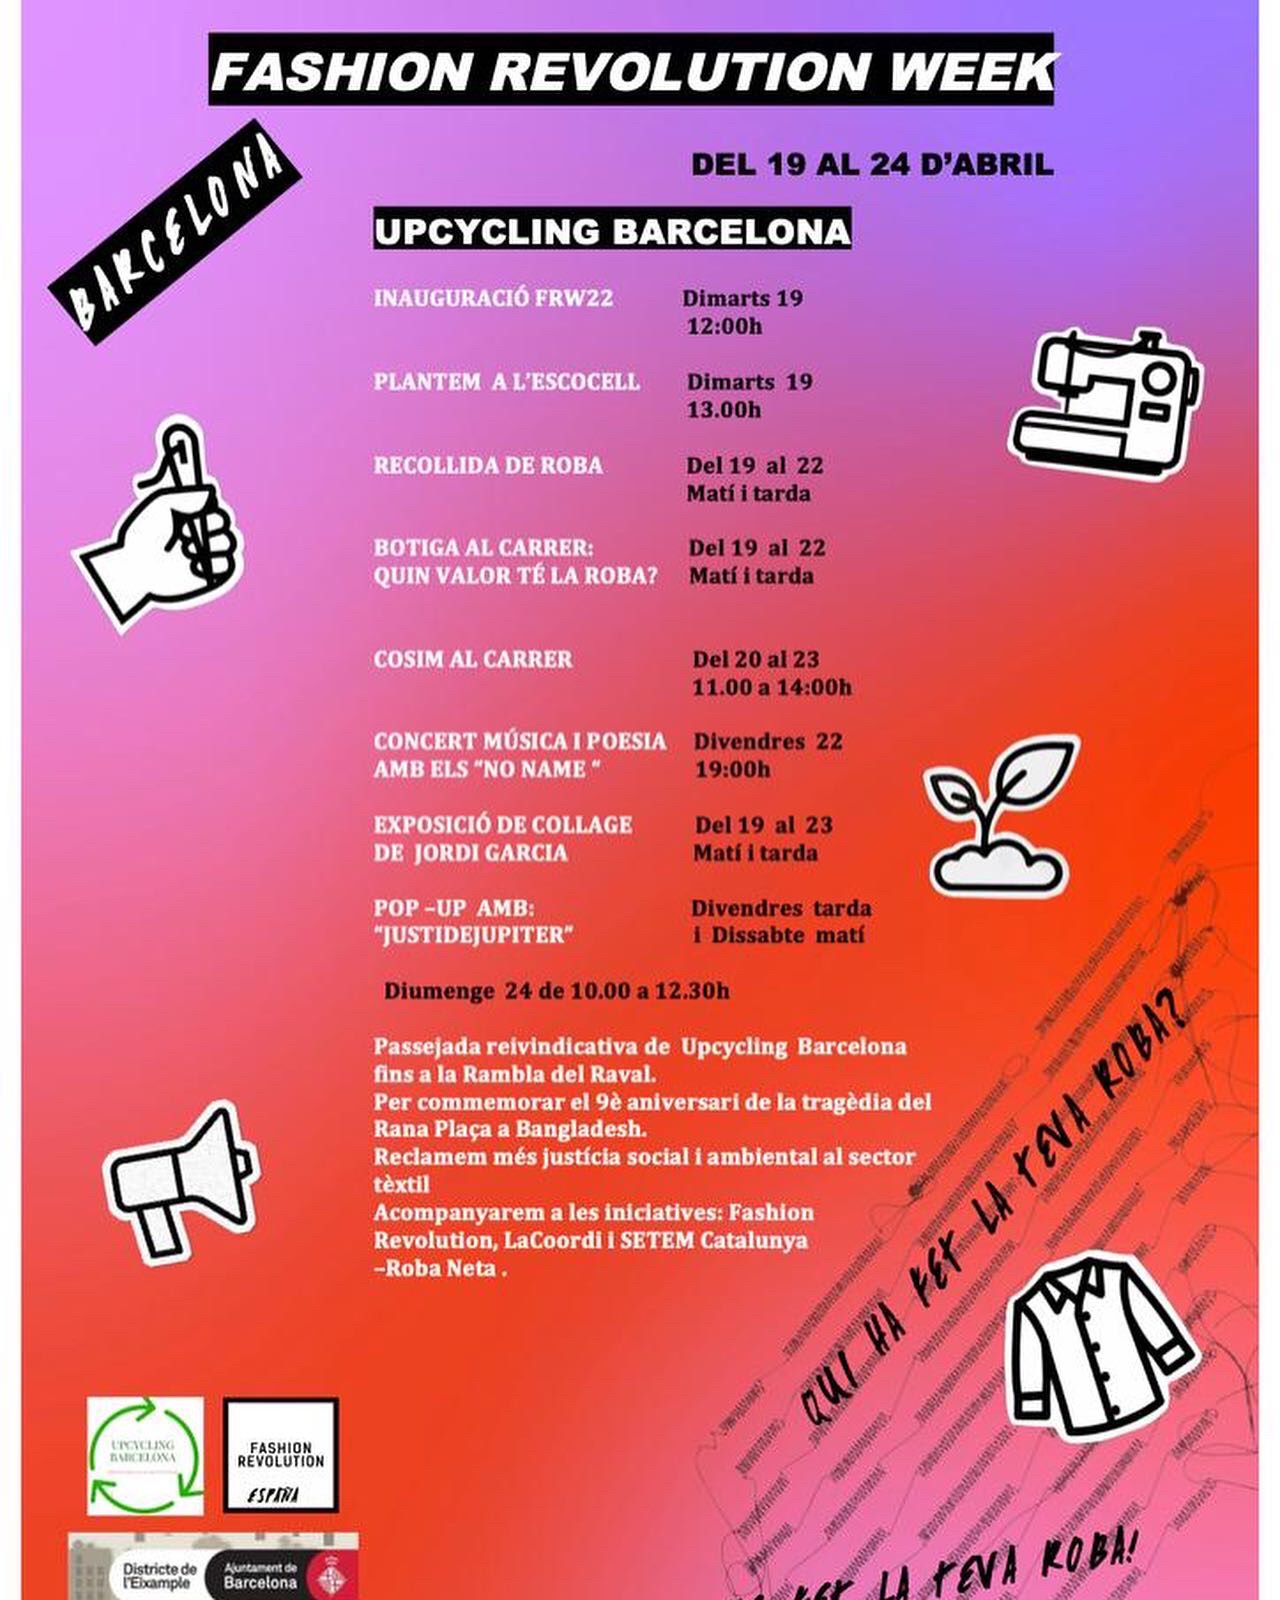 Upcycling Barcelona - FASHION REVOLUTION WEEK